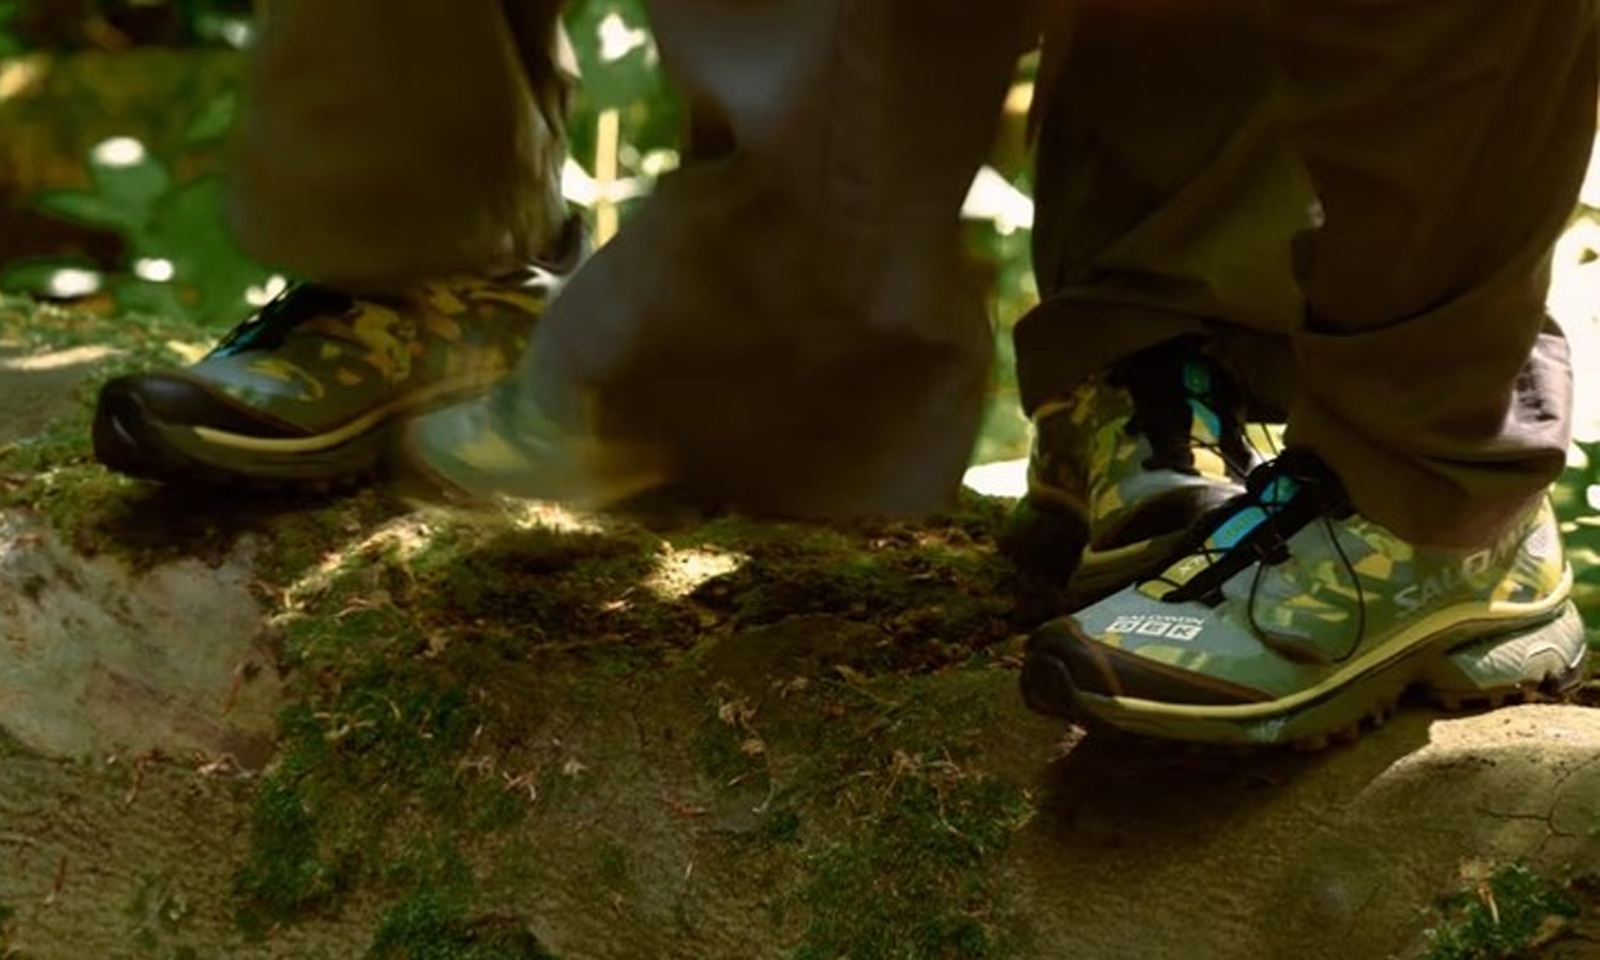 Deckmental x SALOMON Festival 2023「XT-4 OG」限量款鞋款即将推出